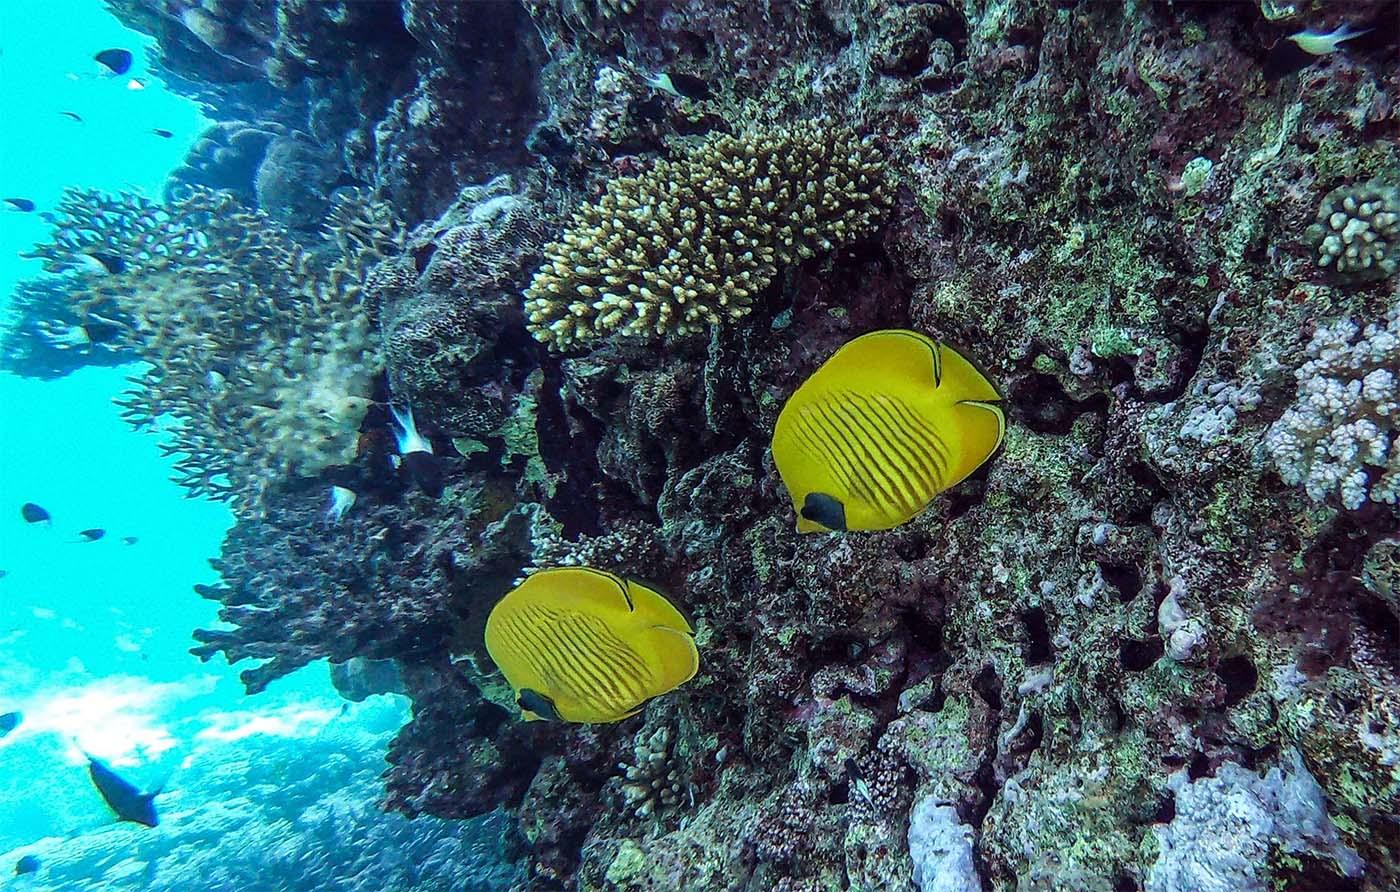 Egypt tourism revival threatens marine ecosystem